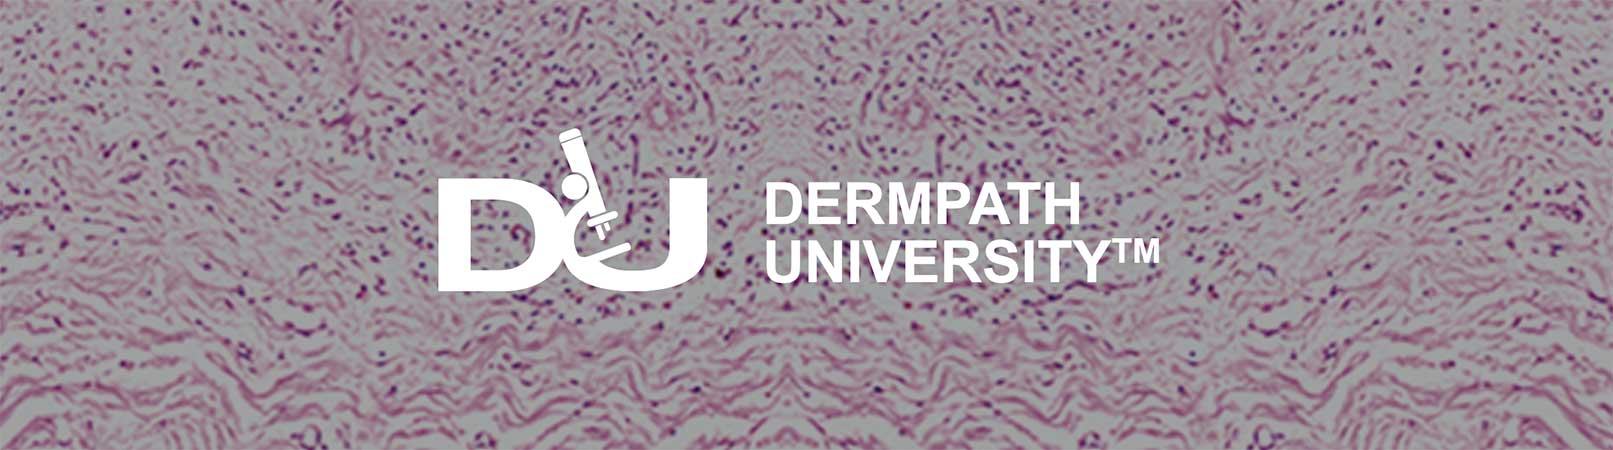 Dermatology Career Openings Dermpath Diagnostics